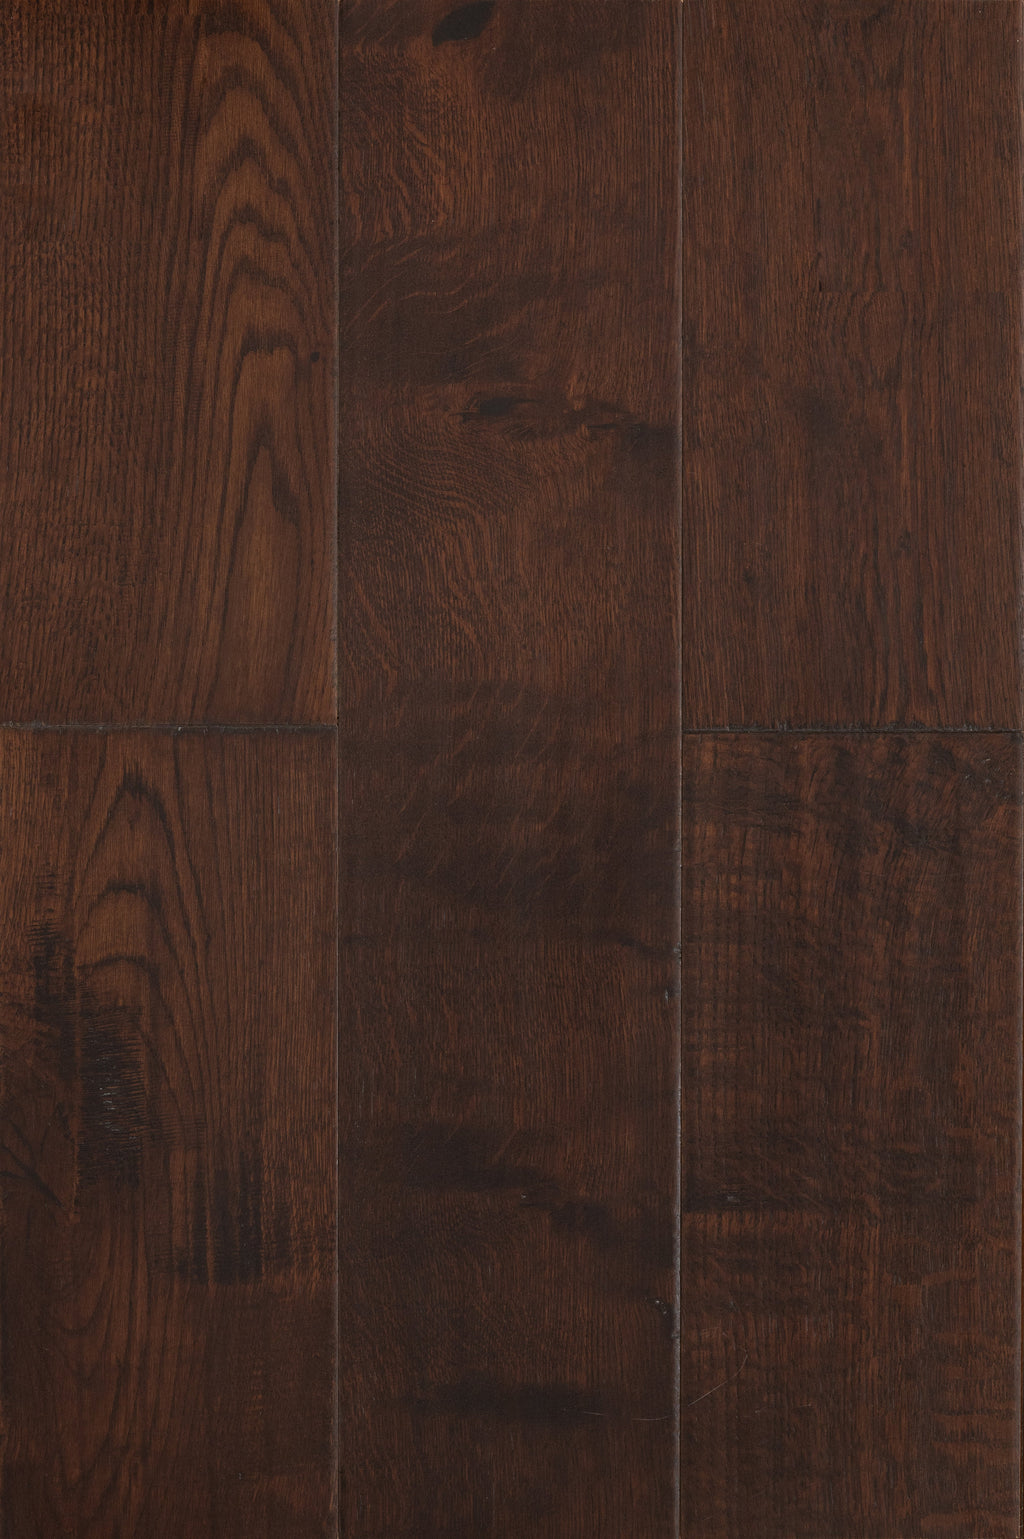 East West Furniture SP-7OH02 Sango Premier Engineered Hardwood Flooring - European Oak - 1/2 in x 7 in x Random Length Handscraped, 26.24 sqft/box, Special Walnut